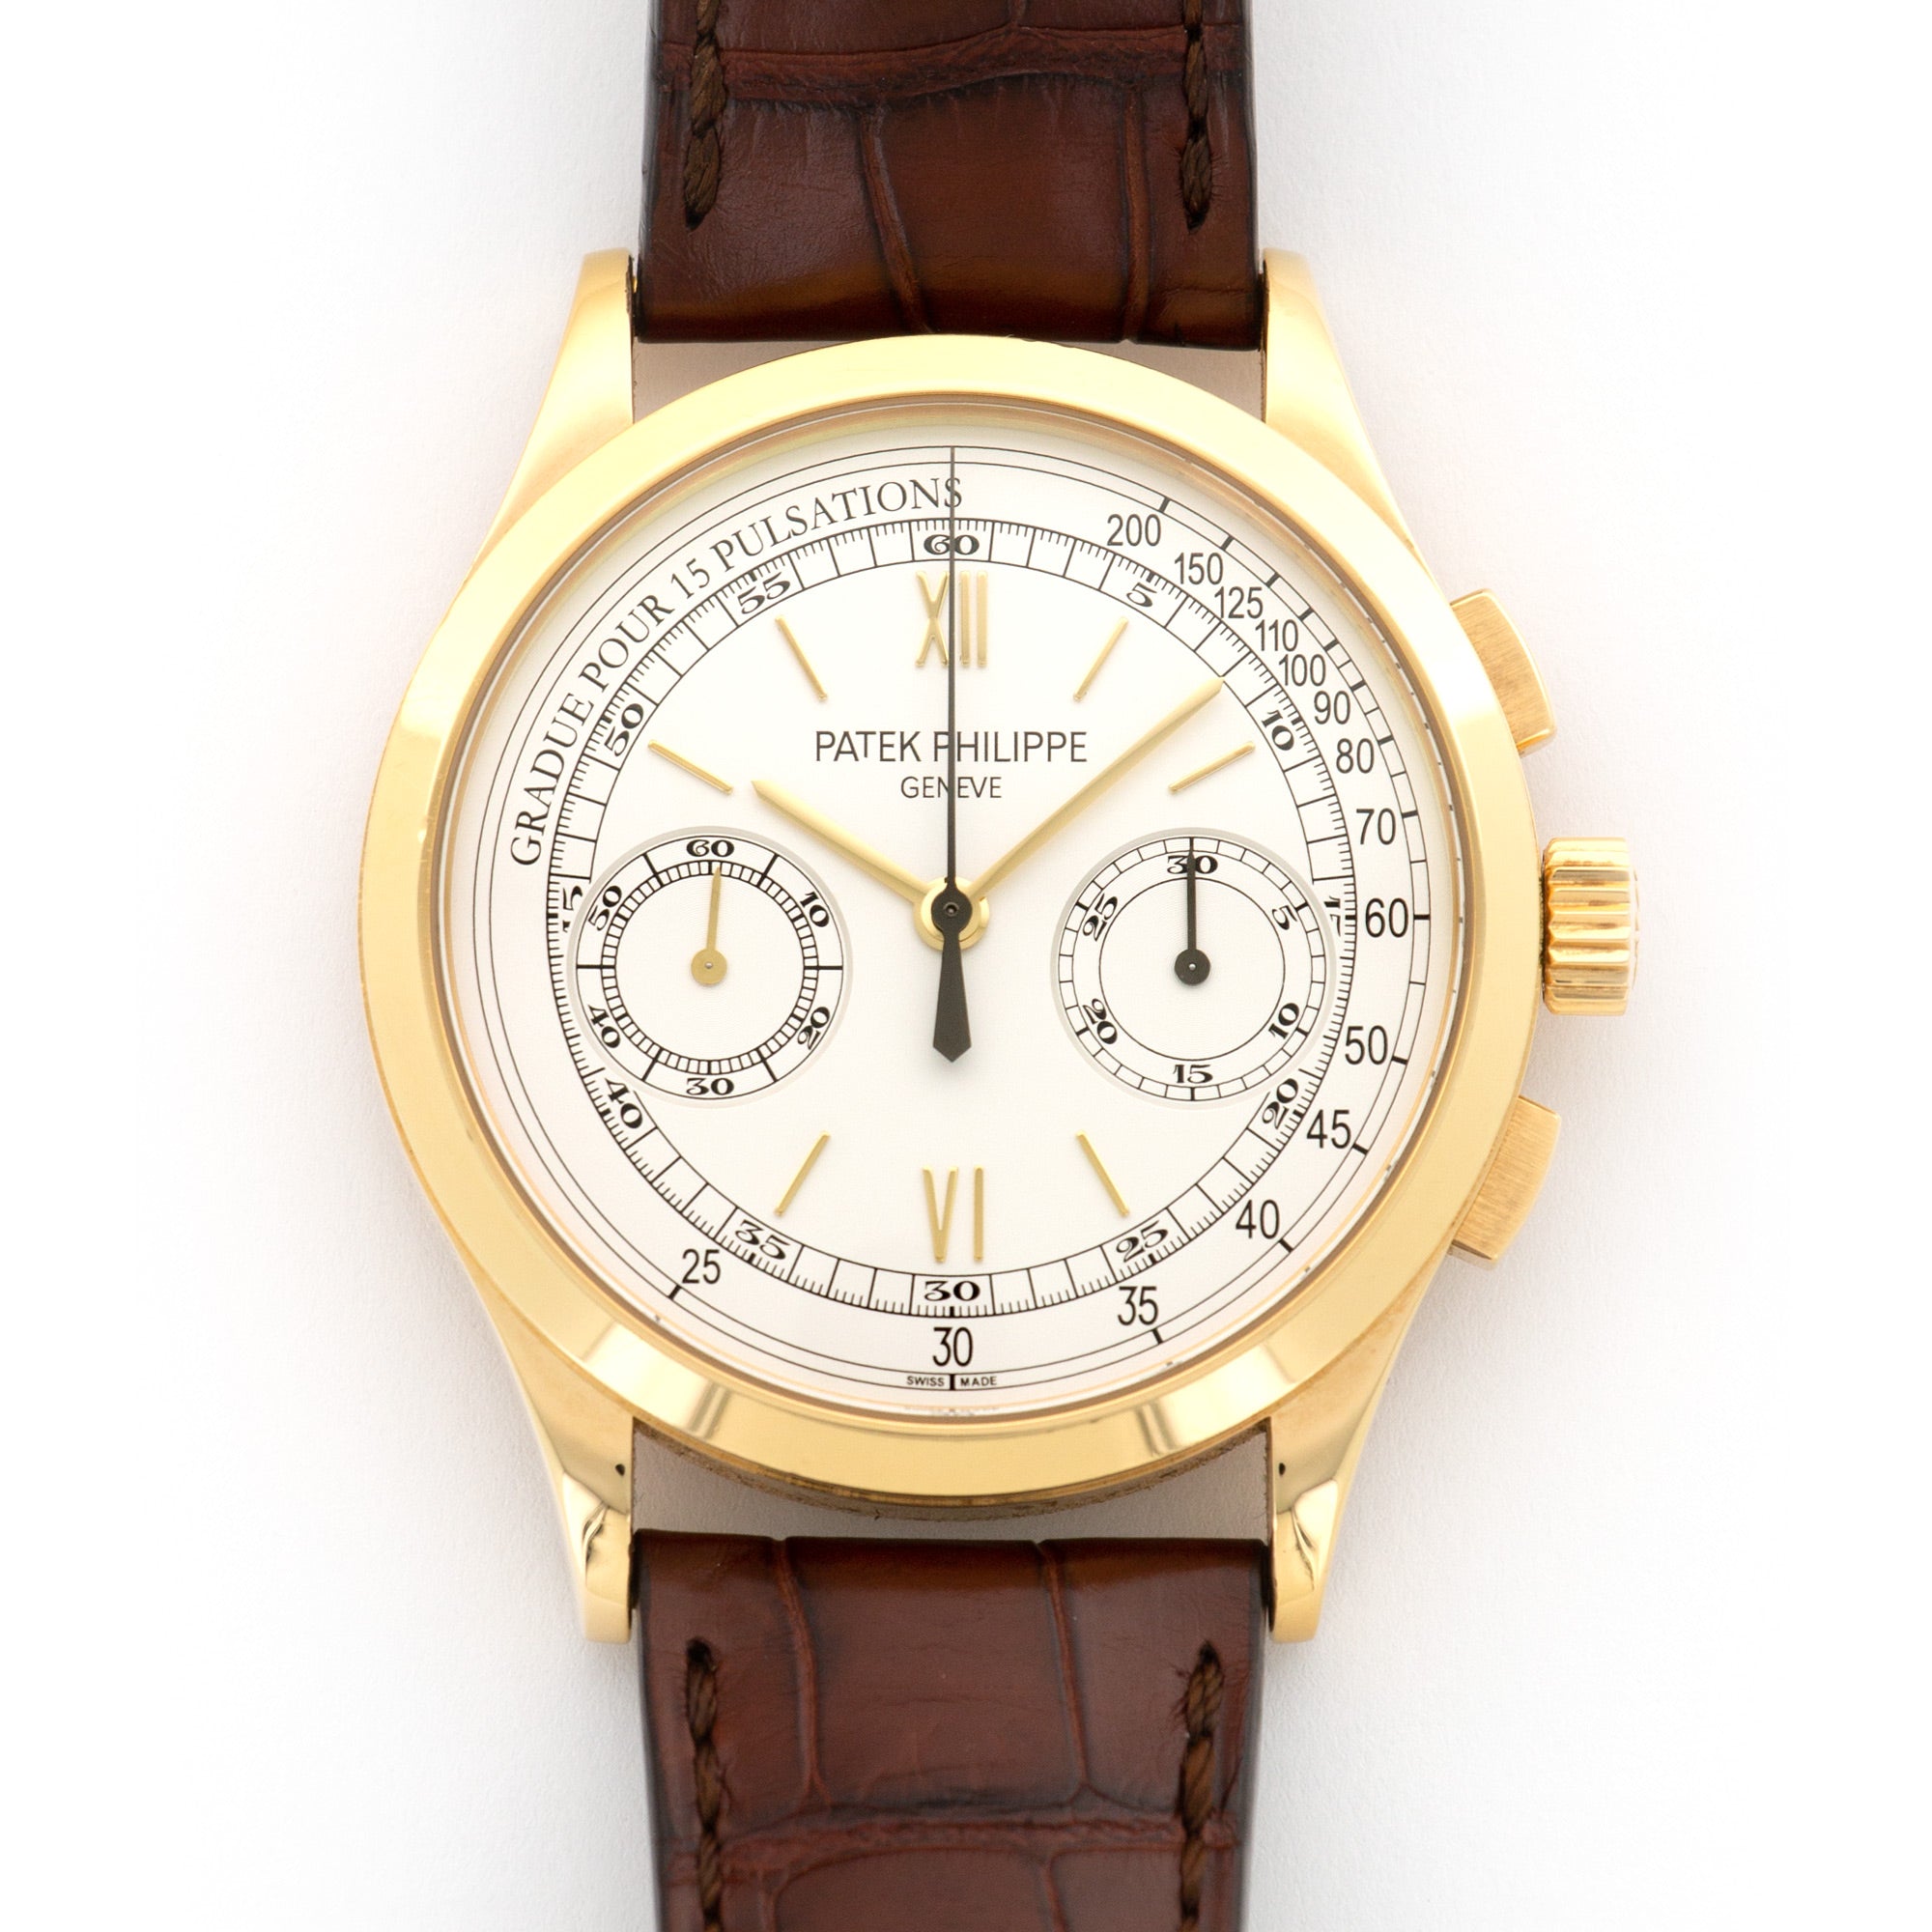 Patek Philippe - Patek Philippe Yellow Gold Chronograph Watch, Ref. 5170 - The Keystone Watches